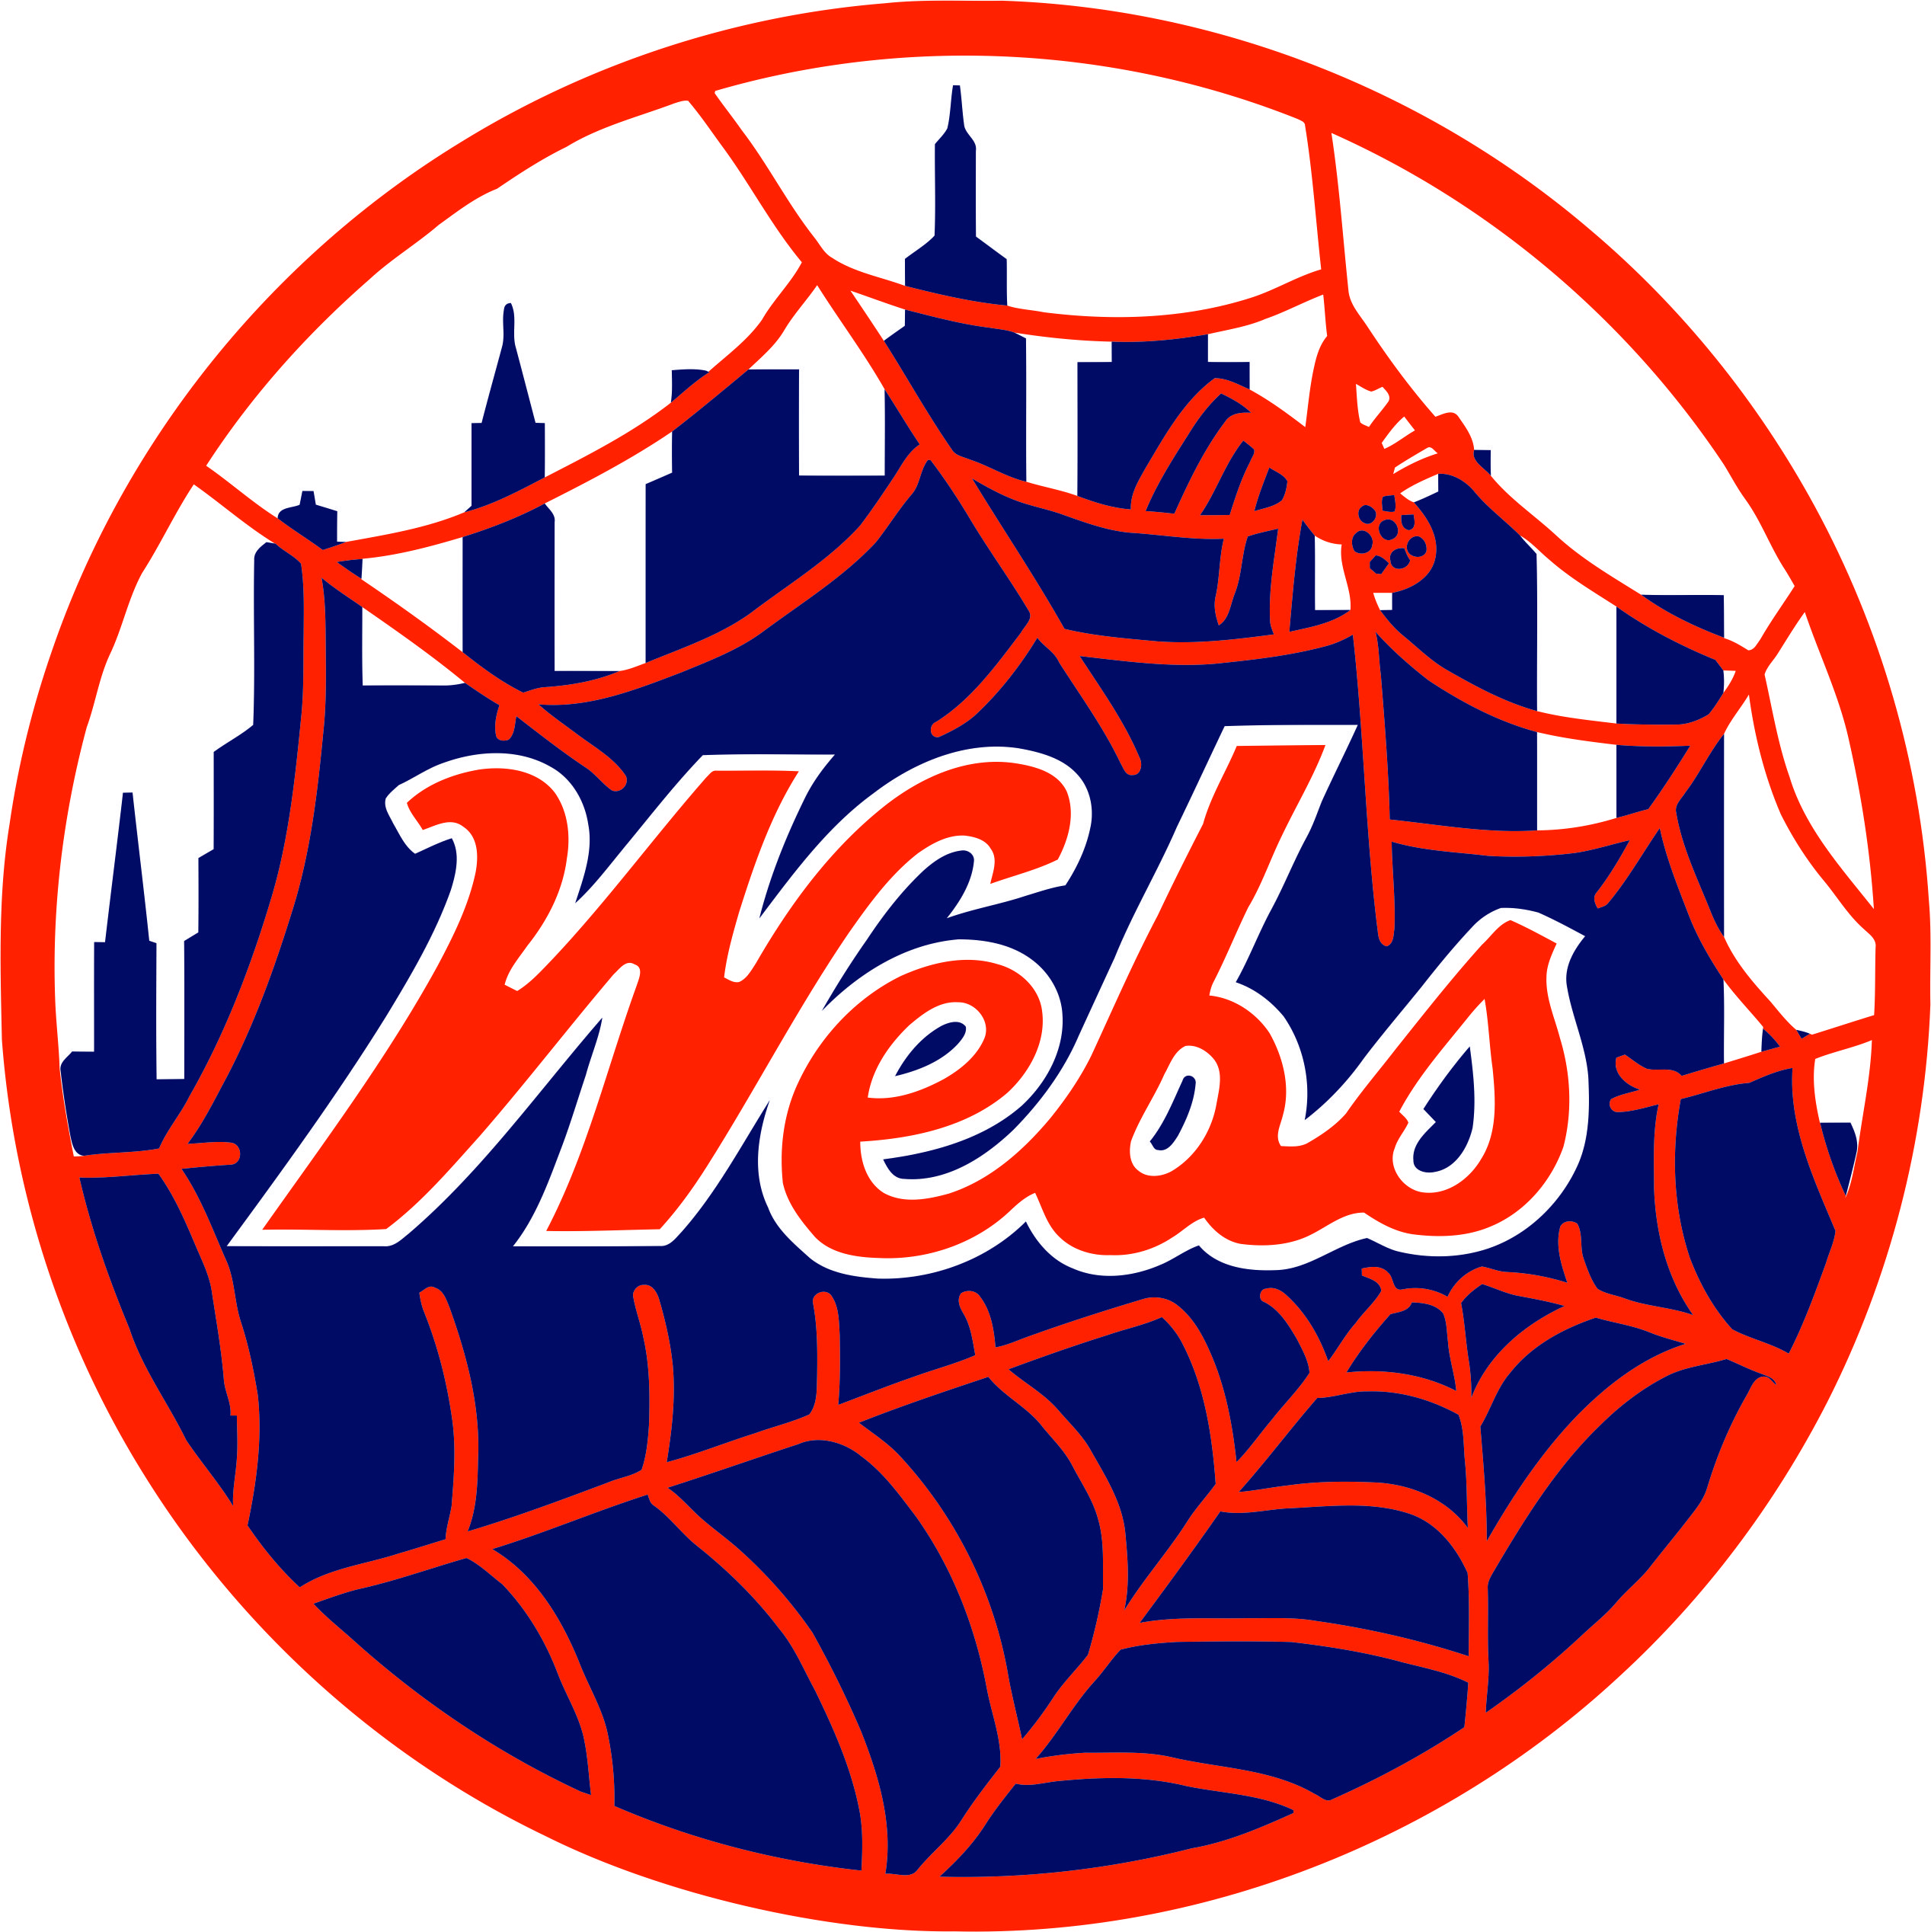 New York Mets Webs Logo fabric transfer